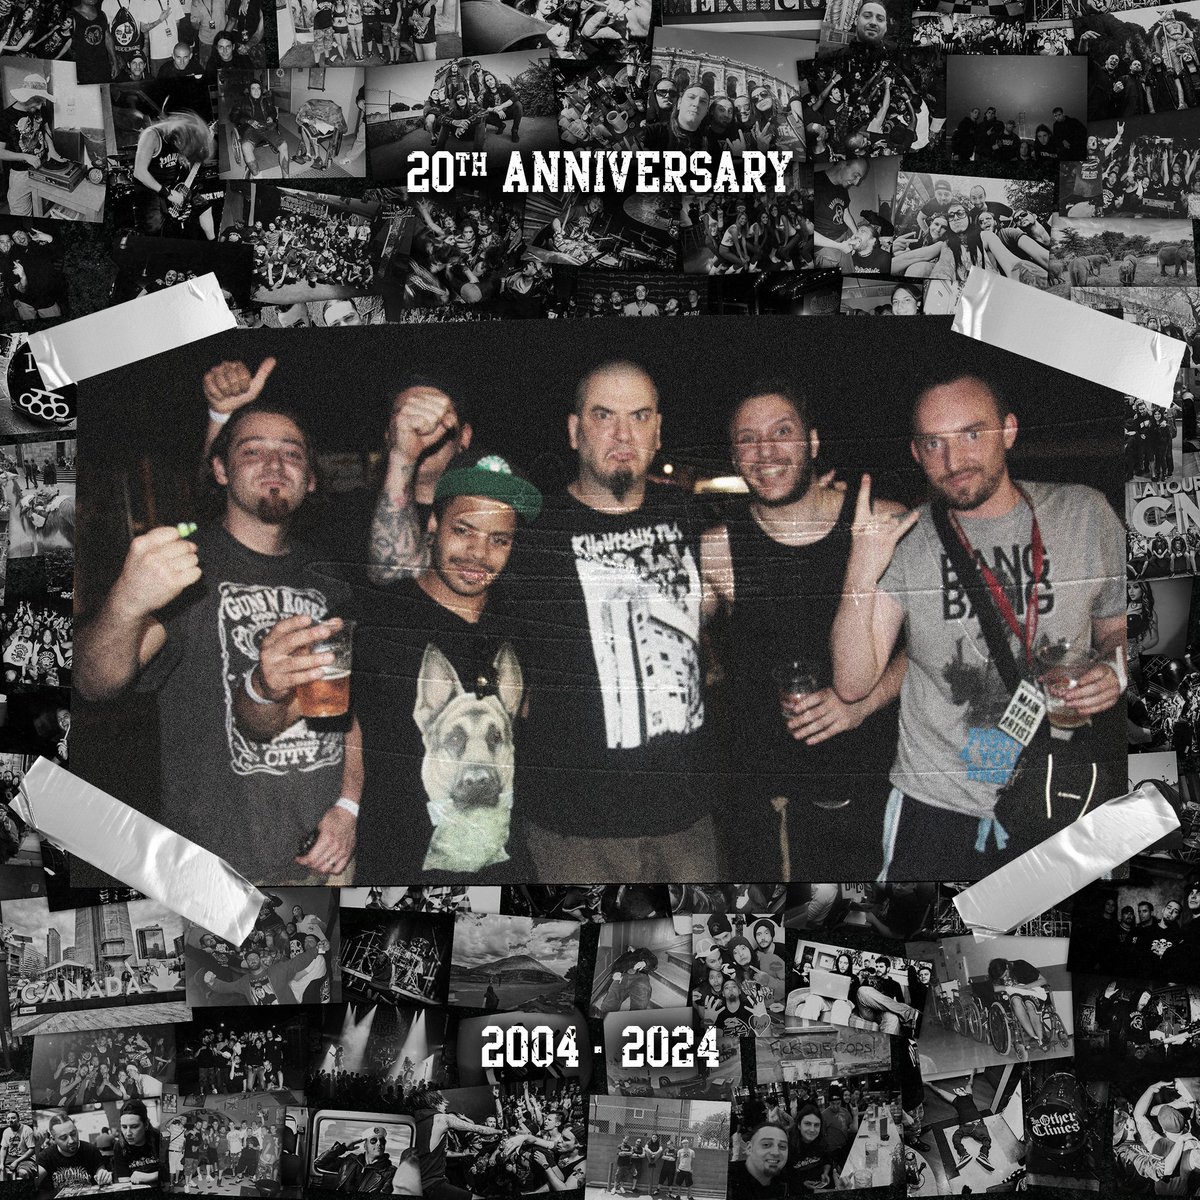 [Throwback] : Metal Fest in Poland, 2013 w/ the boss #PhilAnselmo 
20th anniversary : 2004 - 2024

#20YearsStrong #PassionStillLives #SpreadingChaos

#poland #metalfest #pantera #down